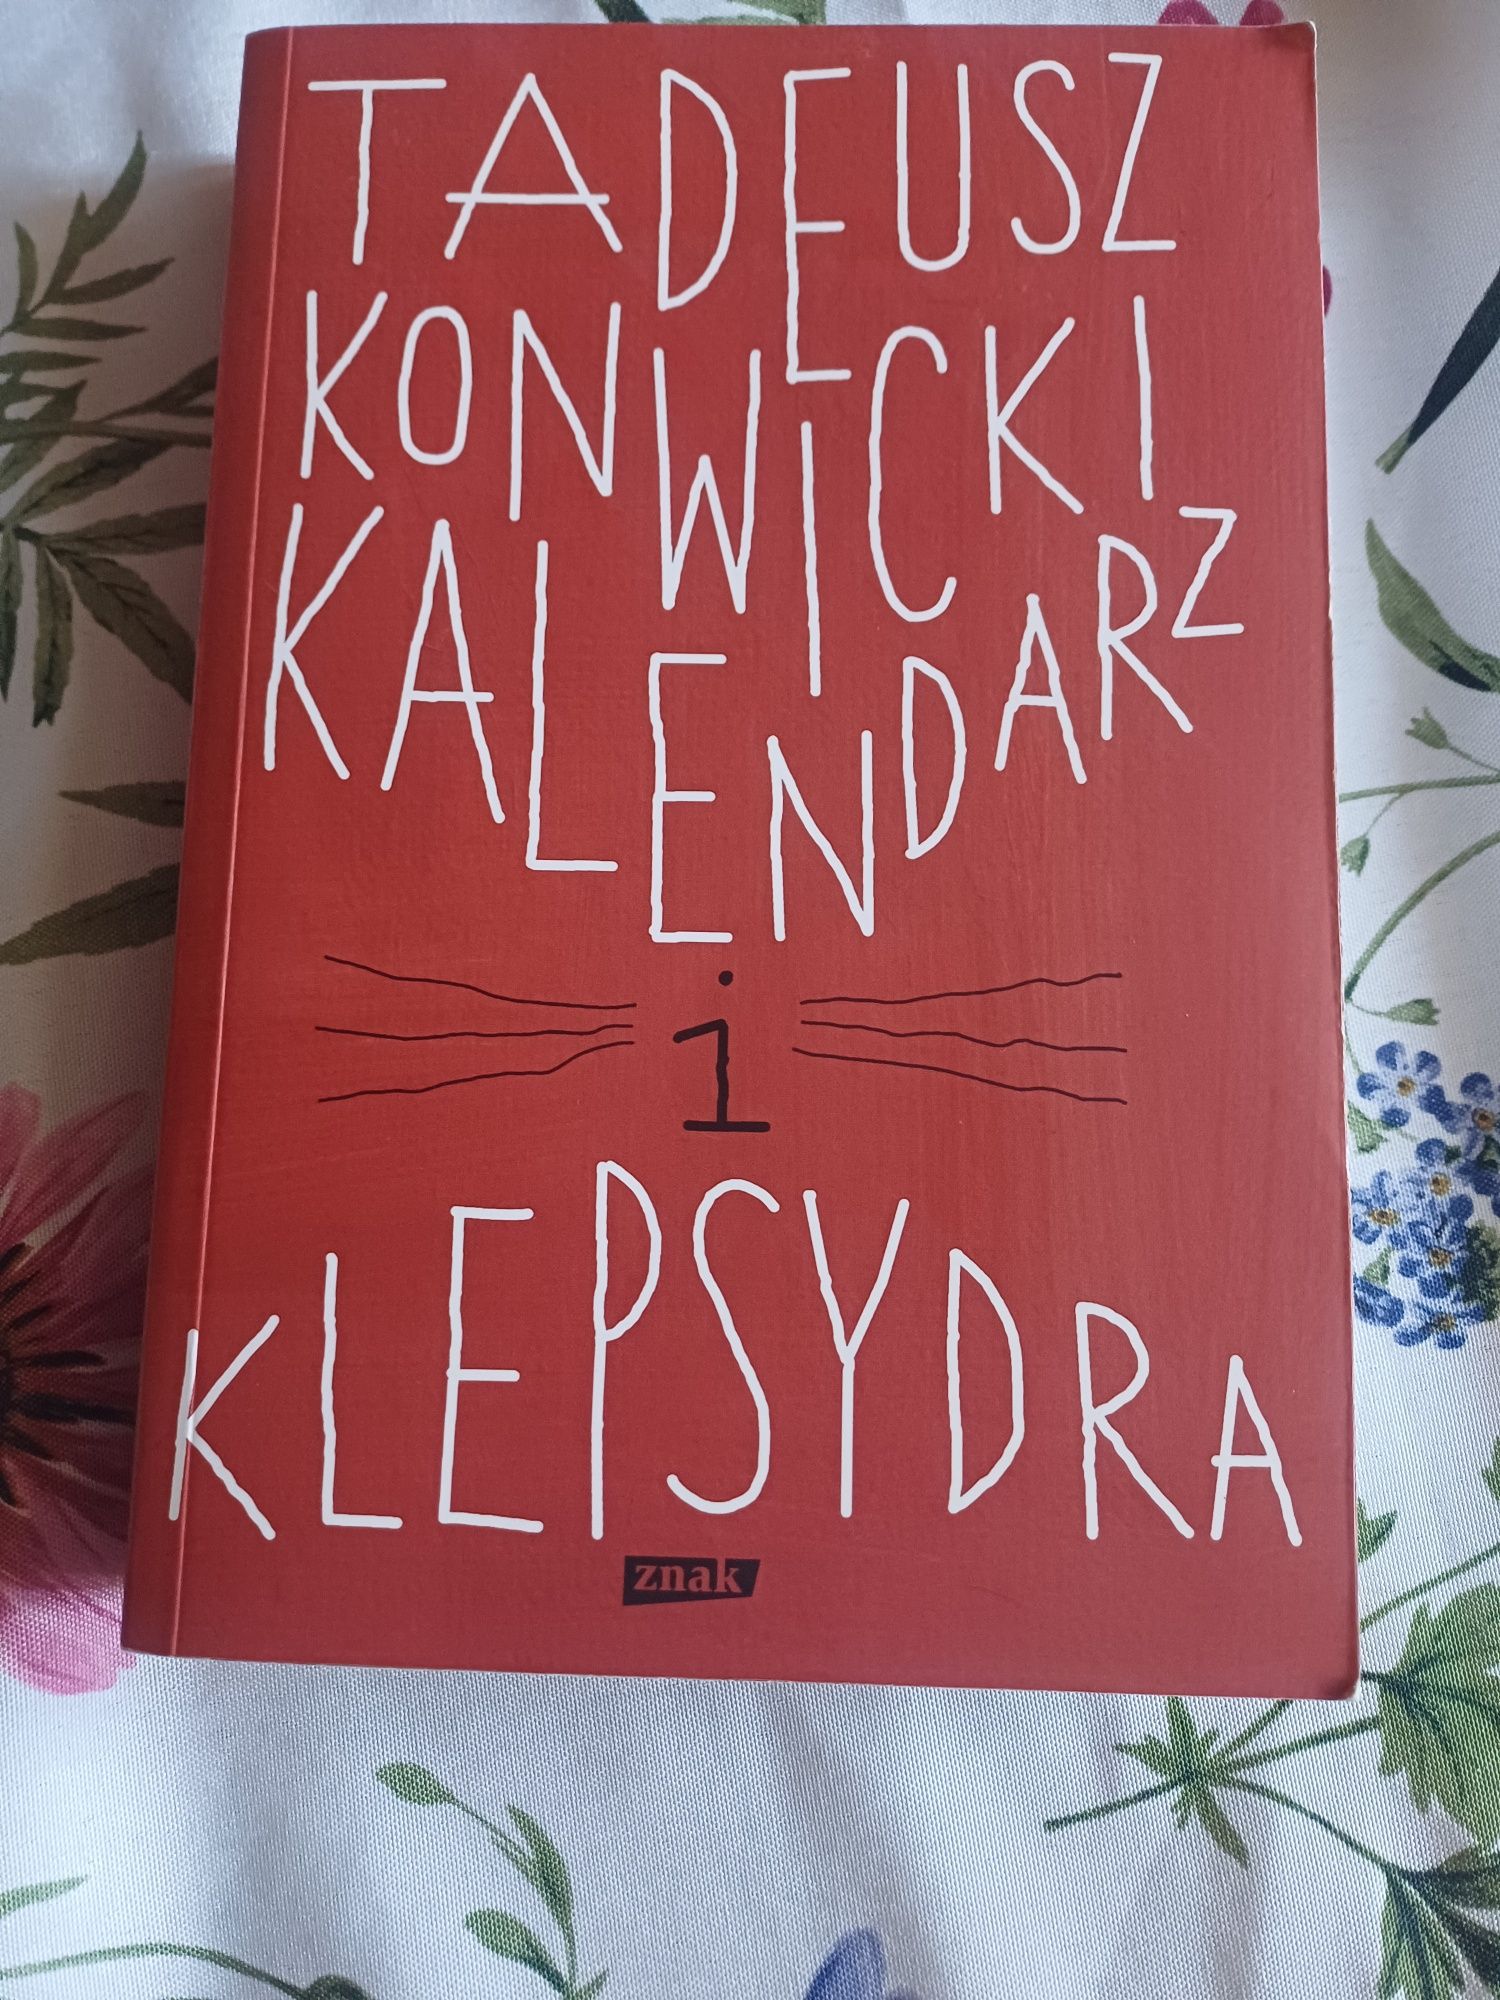 Tadeusz Konwicki Kalendarz i Klepsydra